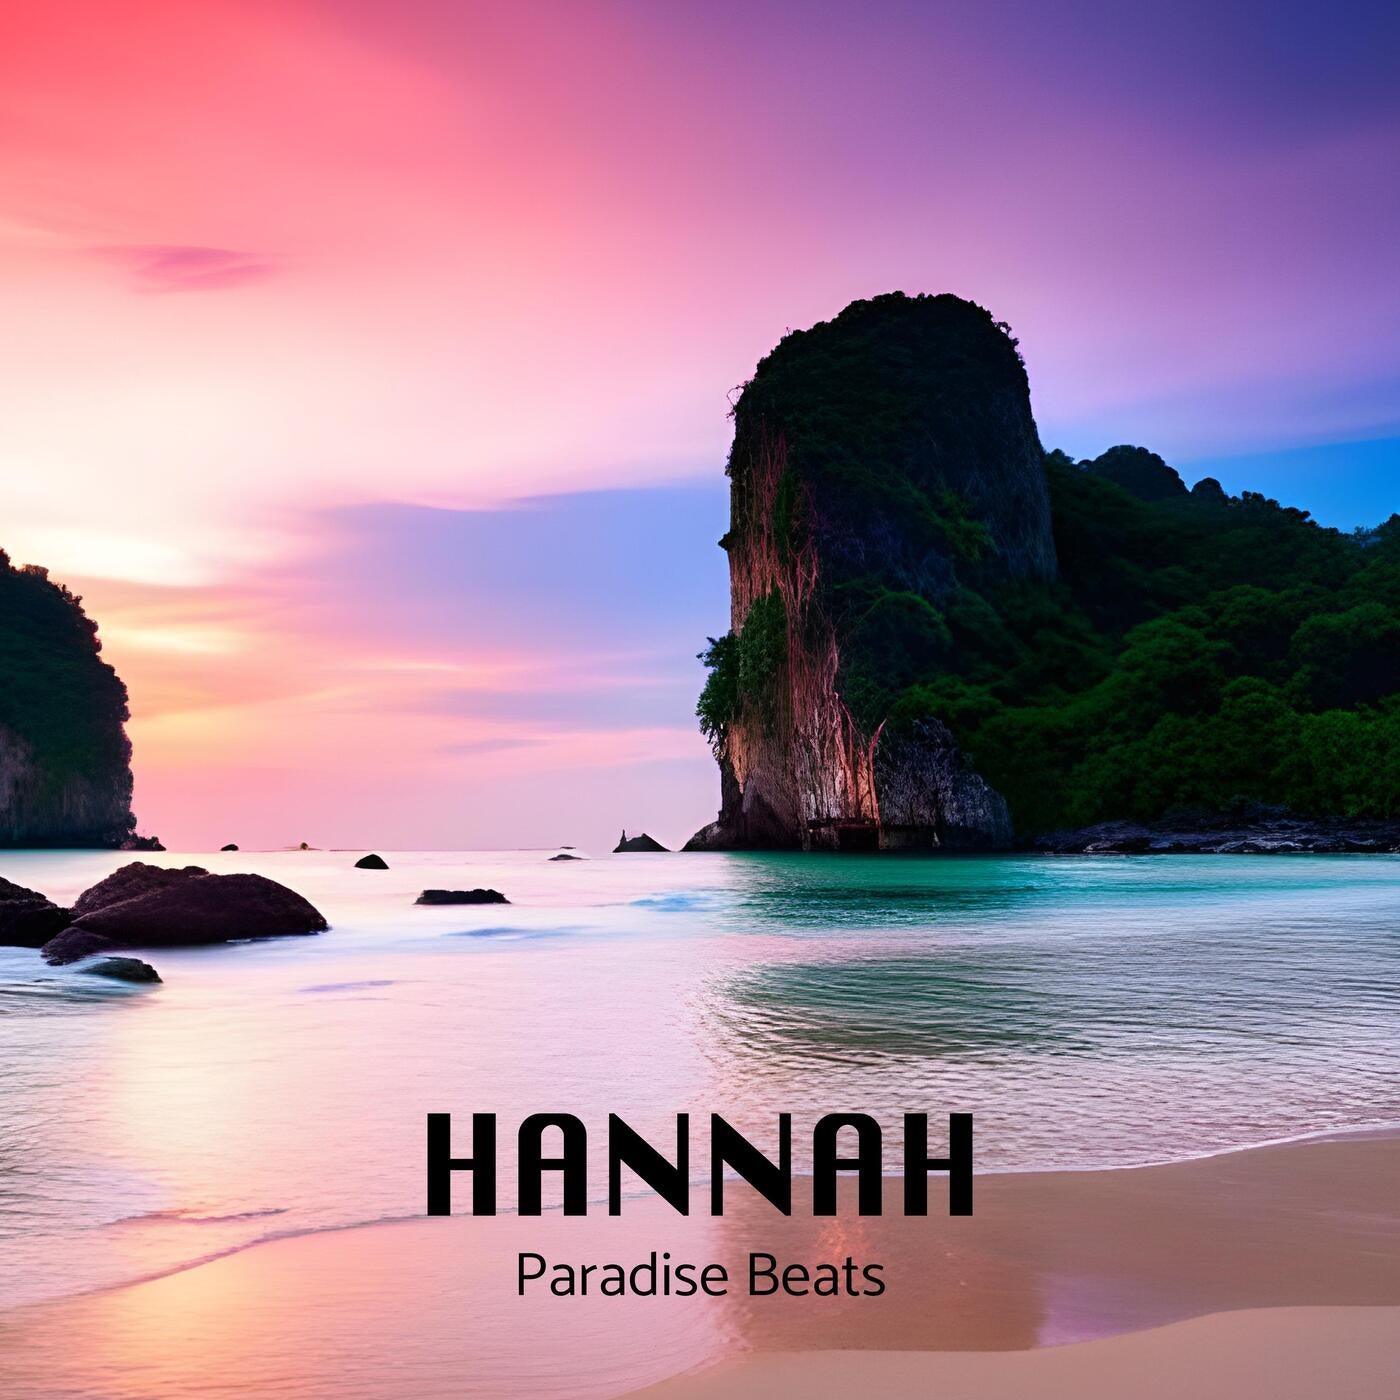 Paradise Beats